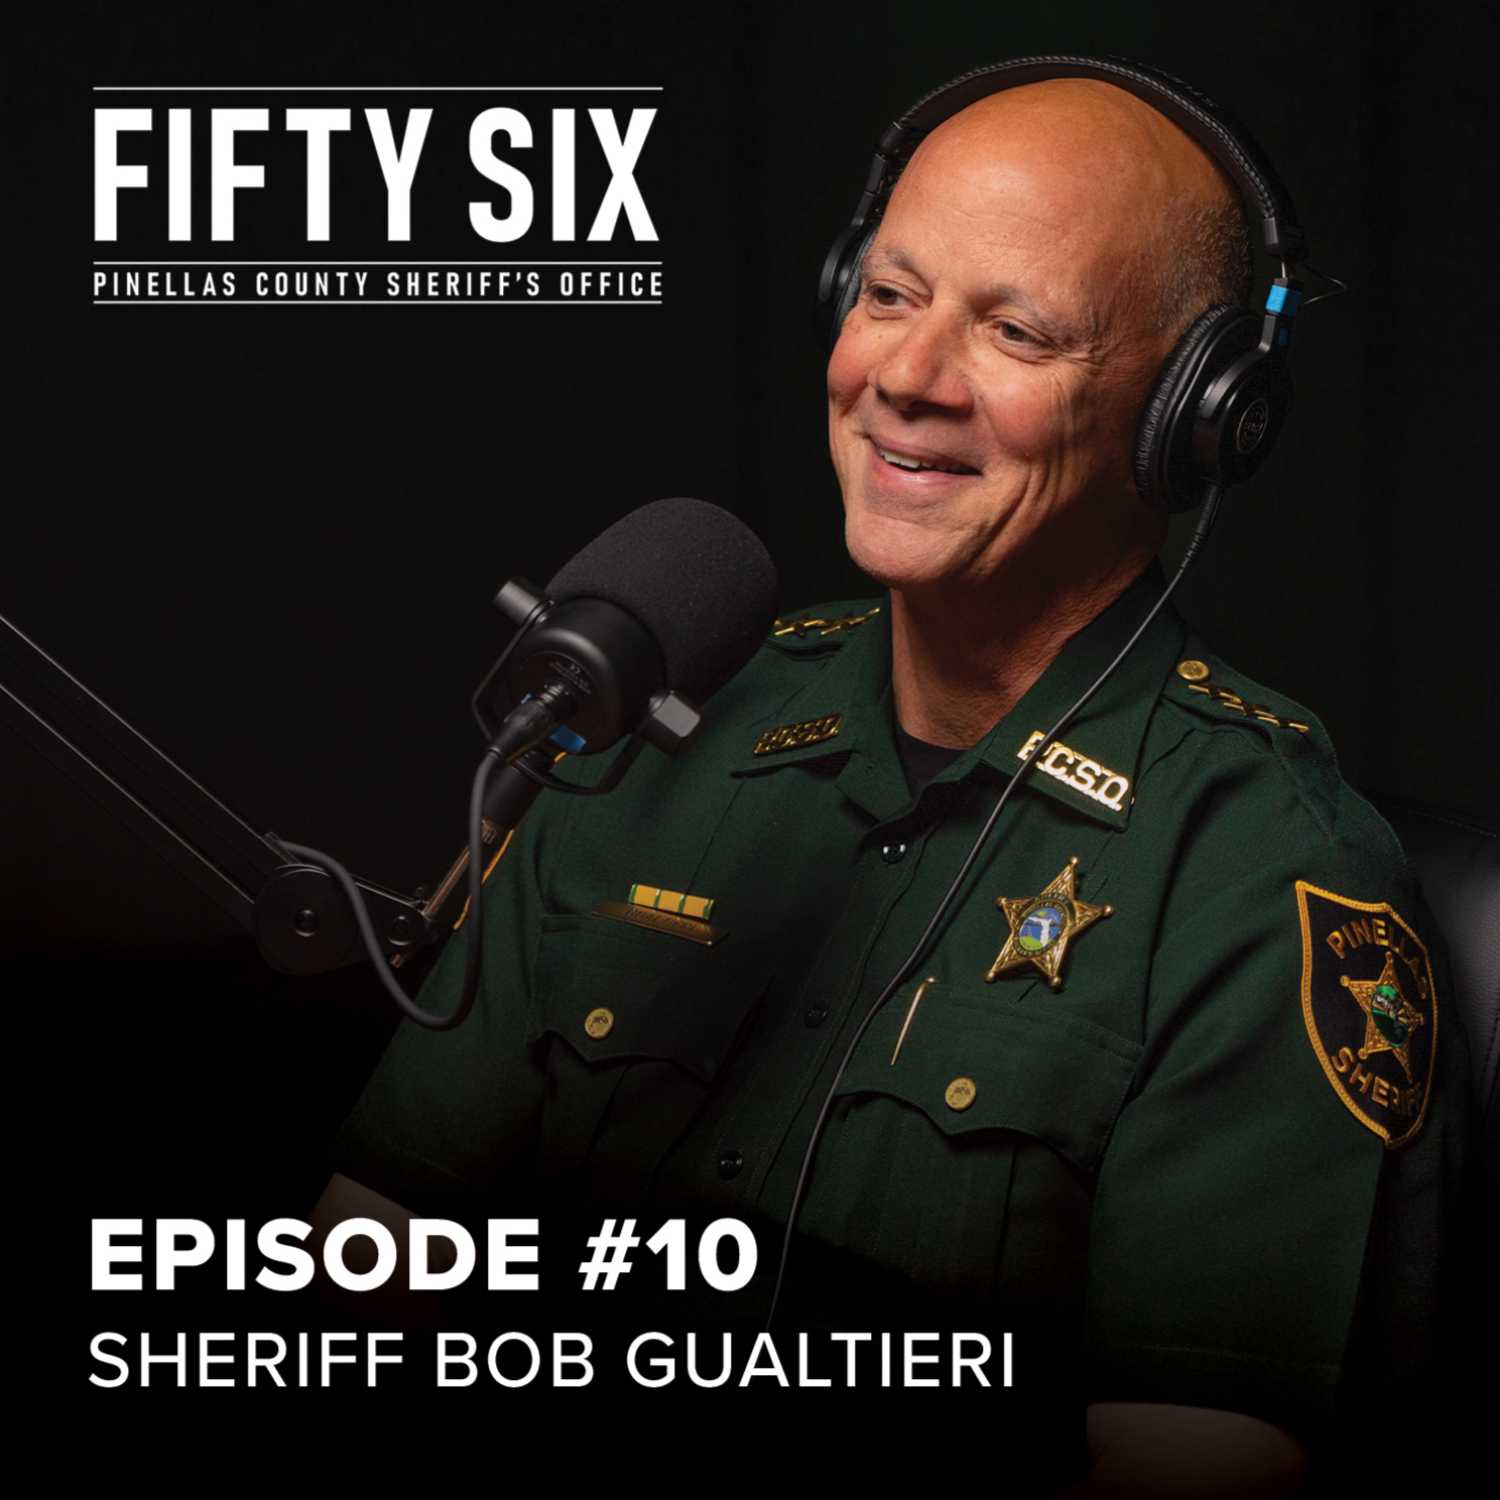 #10 "Certainly Tenacious" - Sheriff Bob Gualtieri